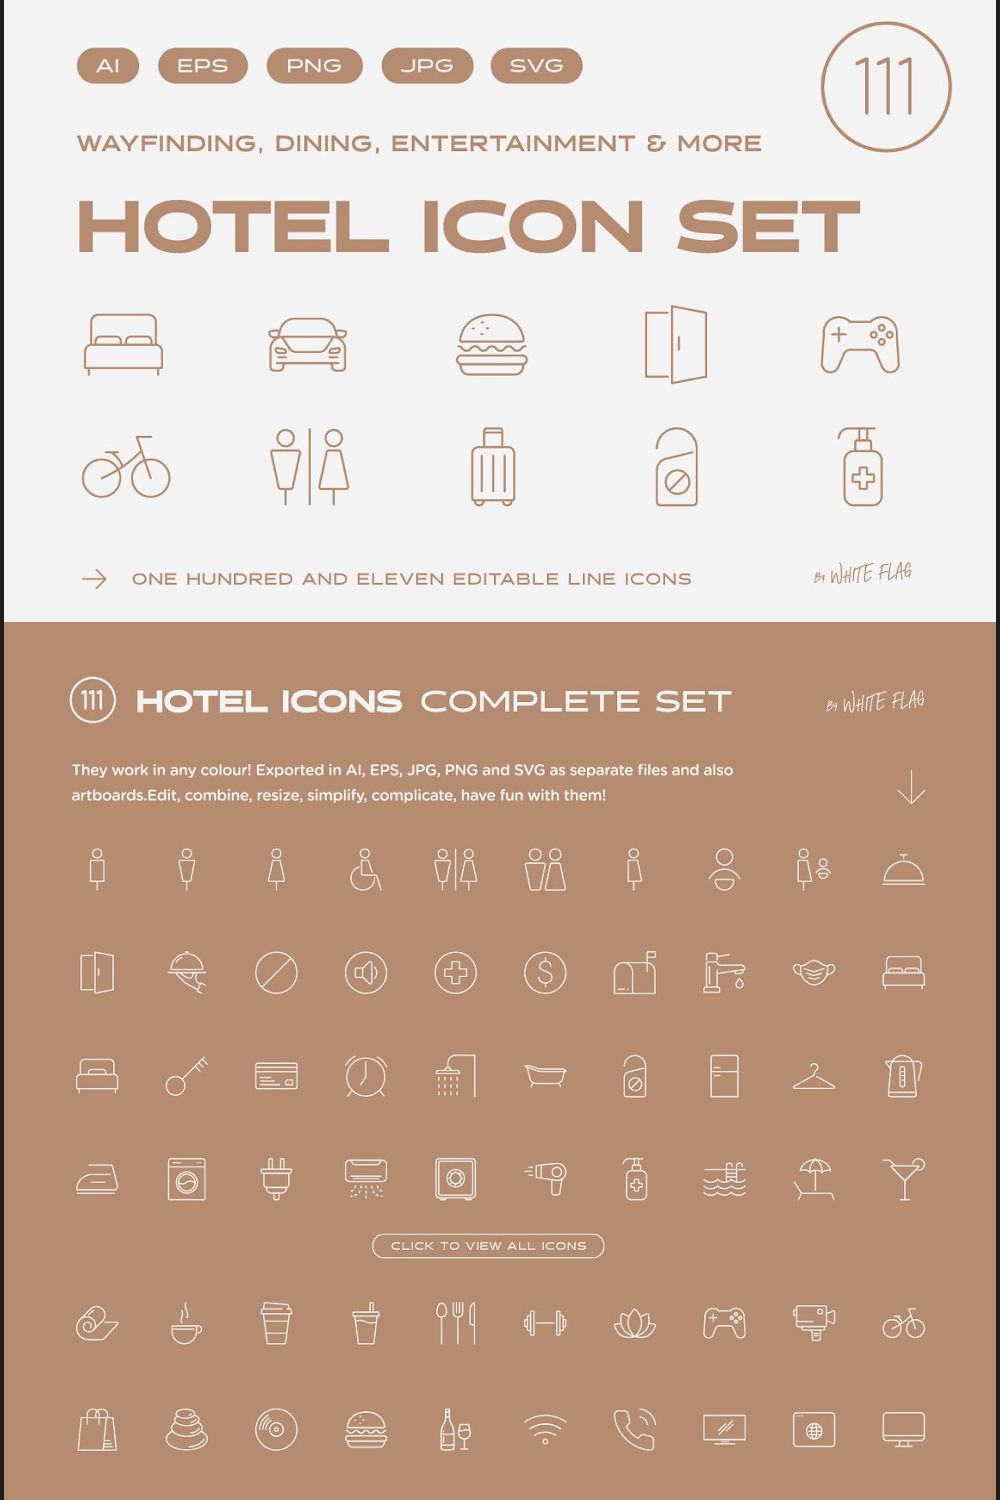 Hotel Icon Set - 111 Line Icons - Pinterest.